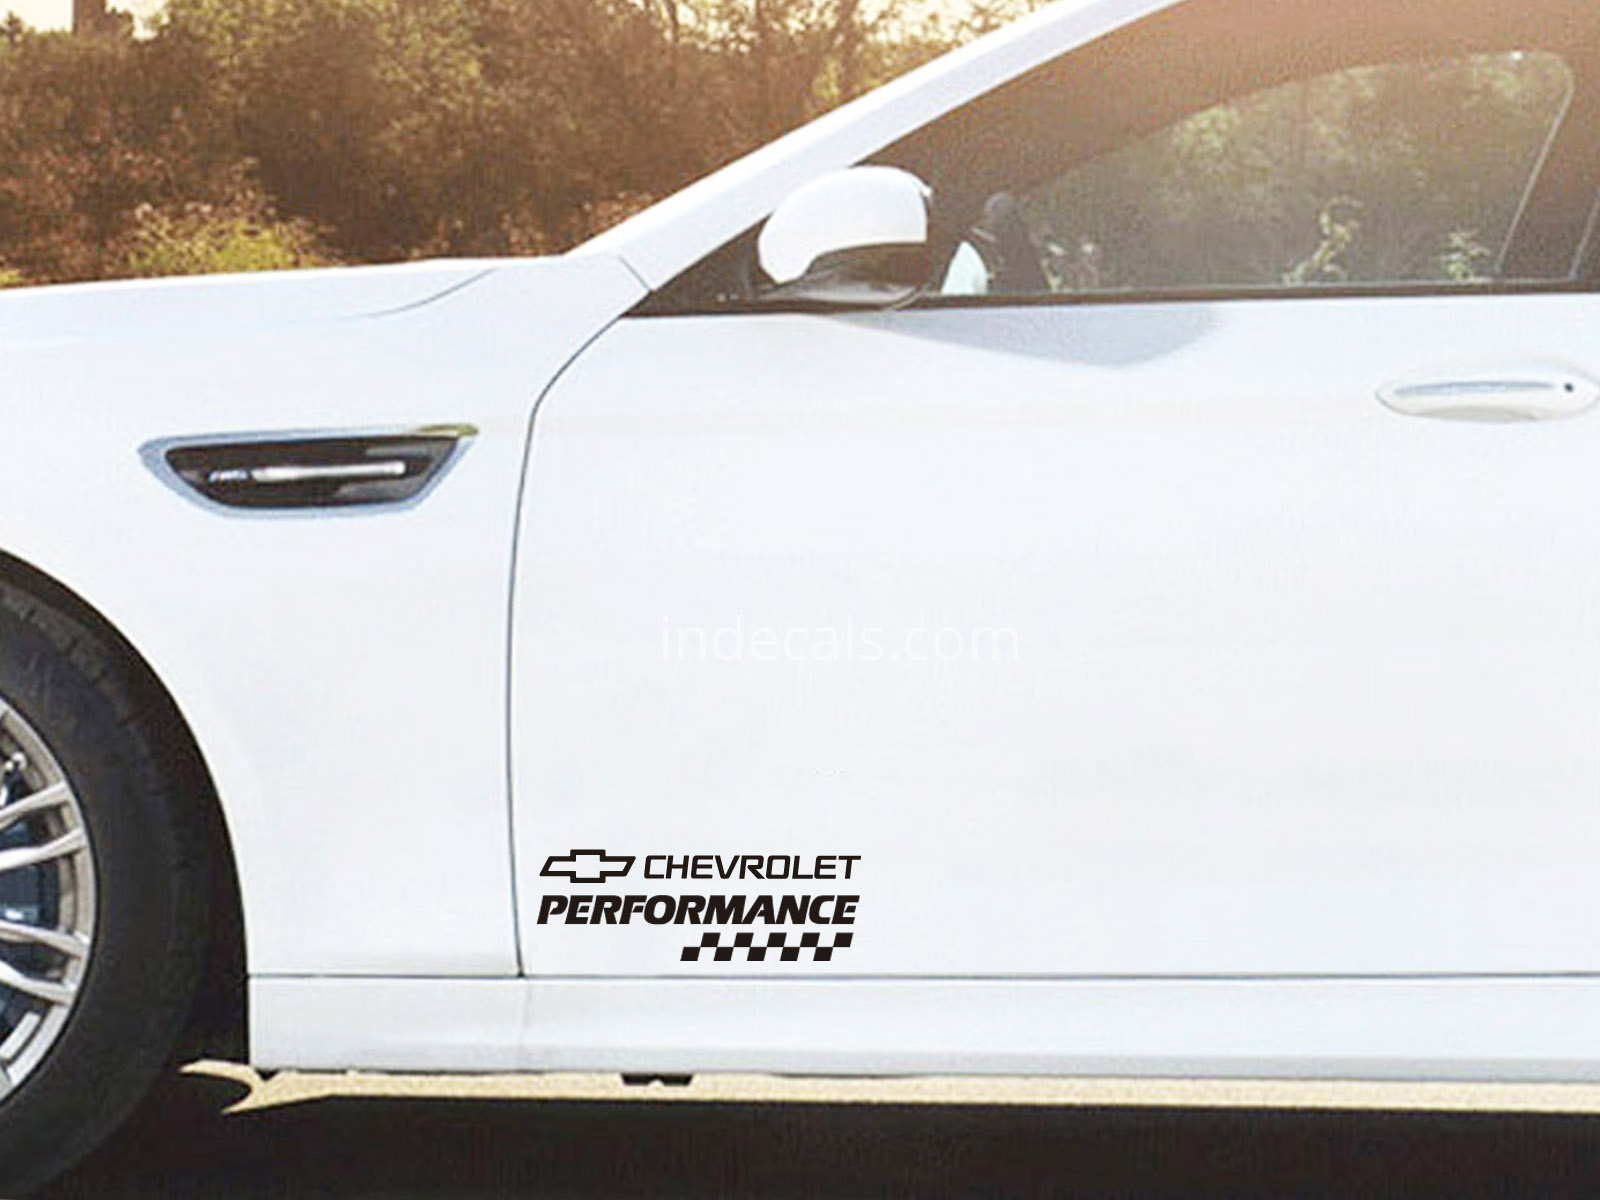 2 x Chevrolet Performance Stickers for Doors - Black